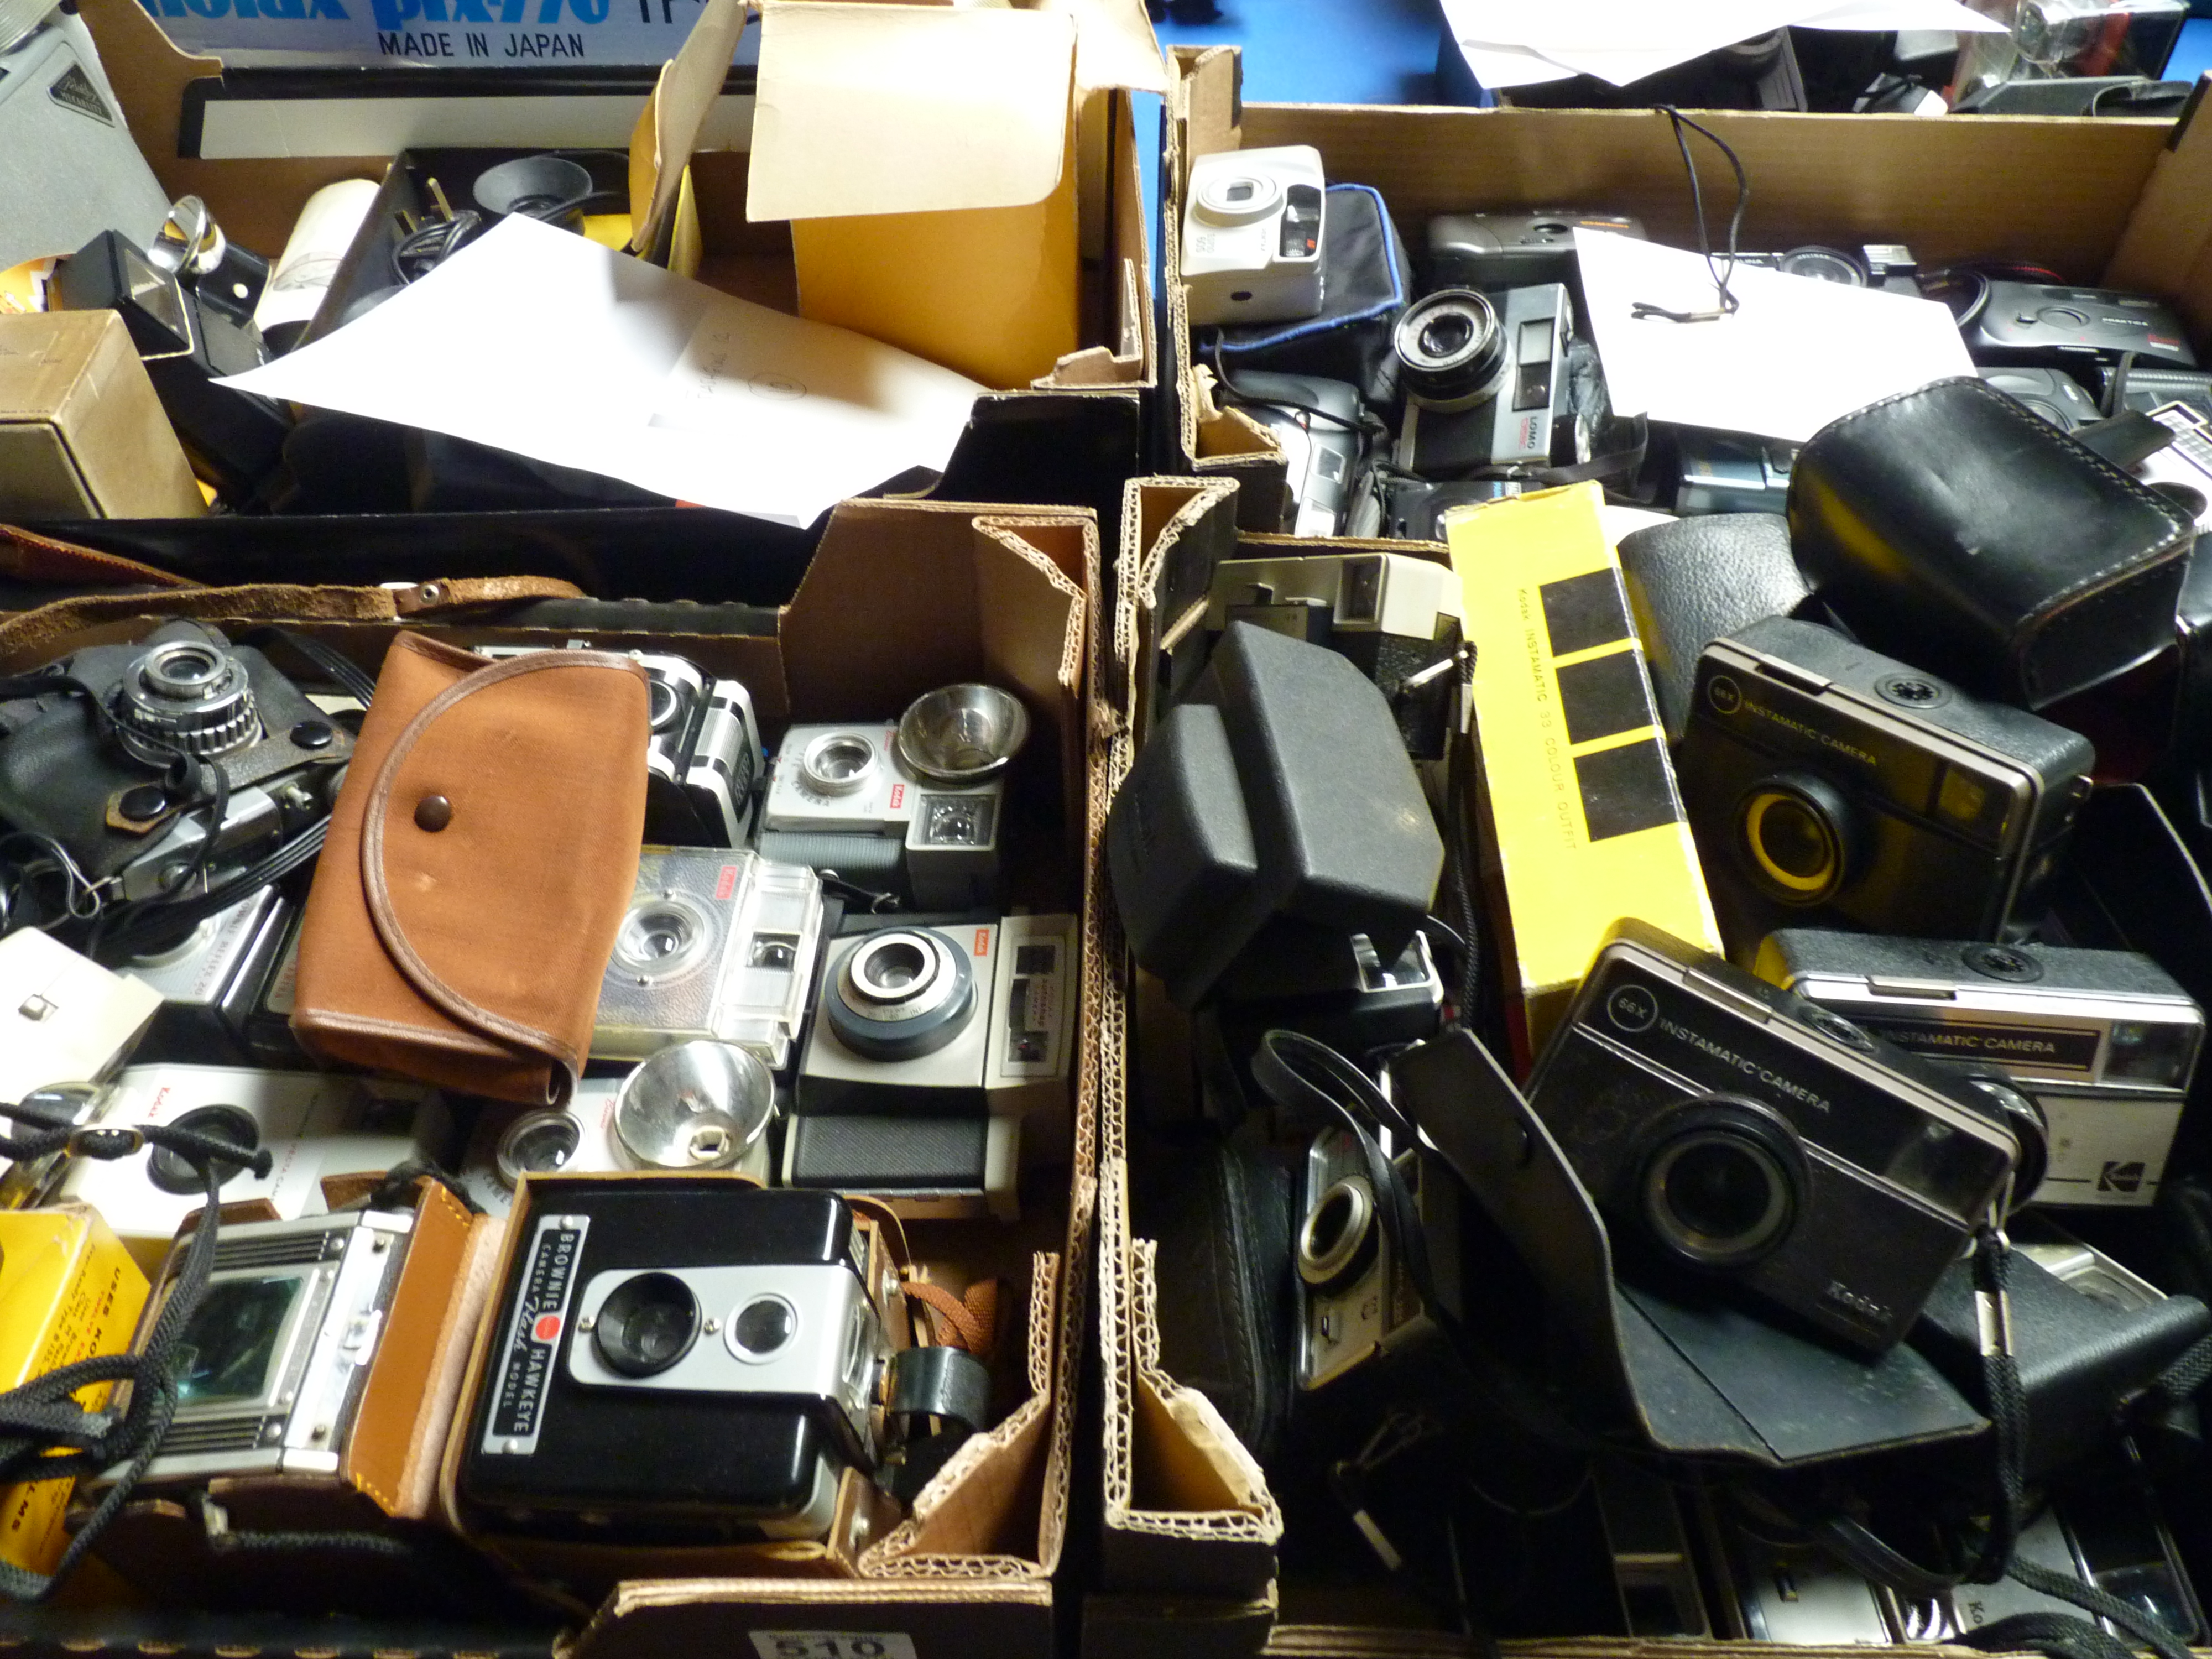 Kodak Instamatic and flashguns etc.